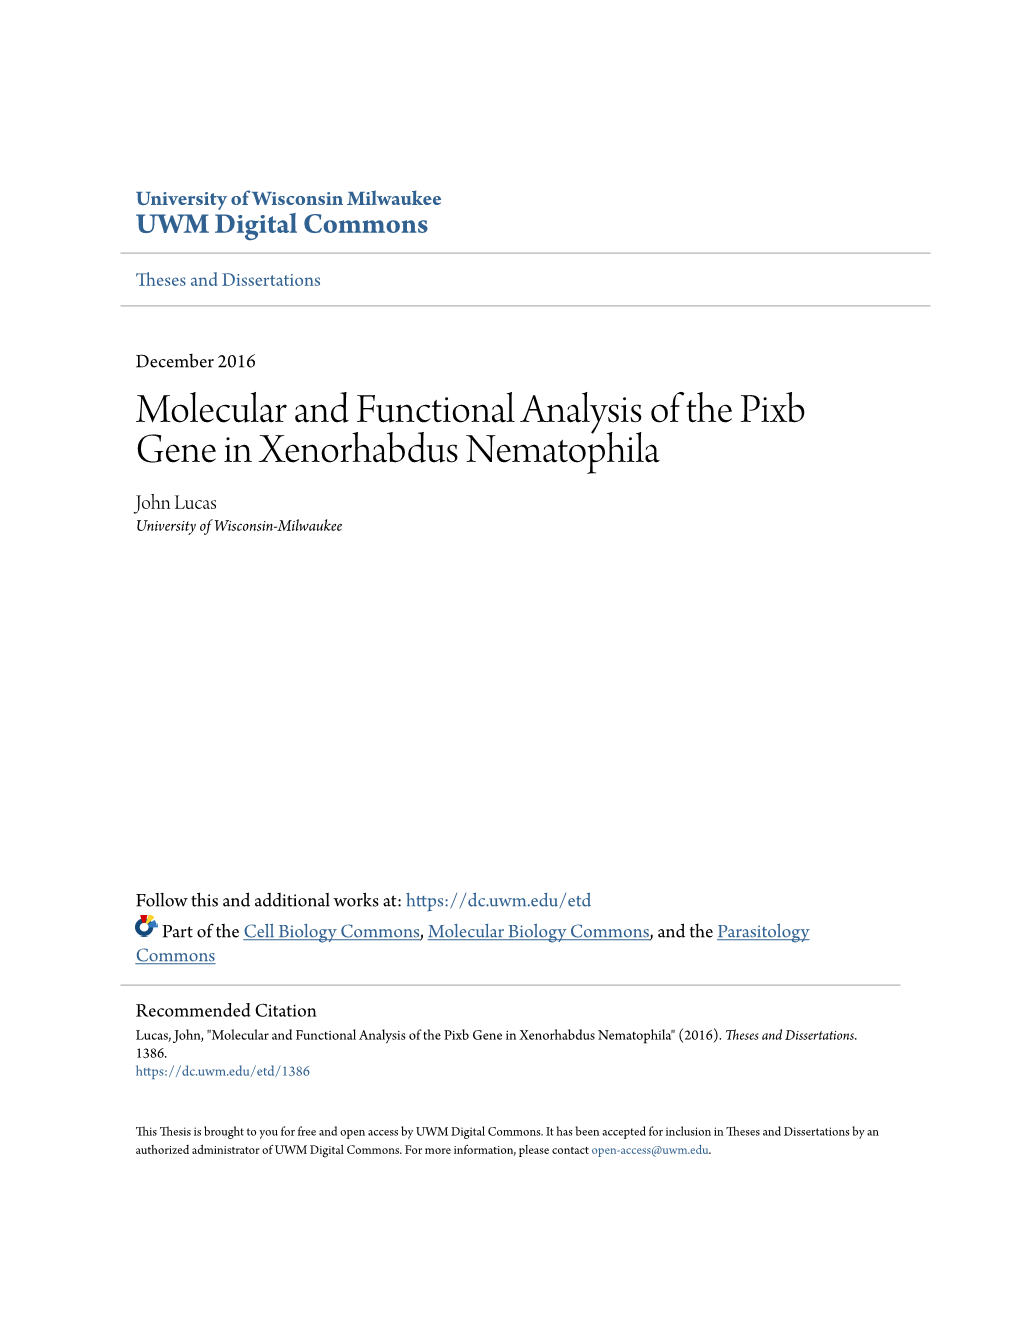 Molecular and Functional Analysis of the Pixb Gene in Xenorhabdus Nematophila John Lucas University of Wisconsin-Milwaukee